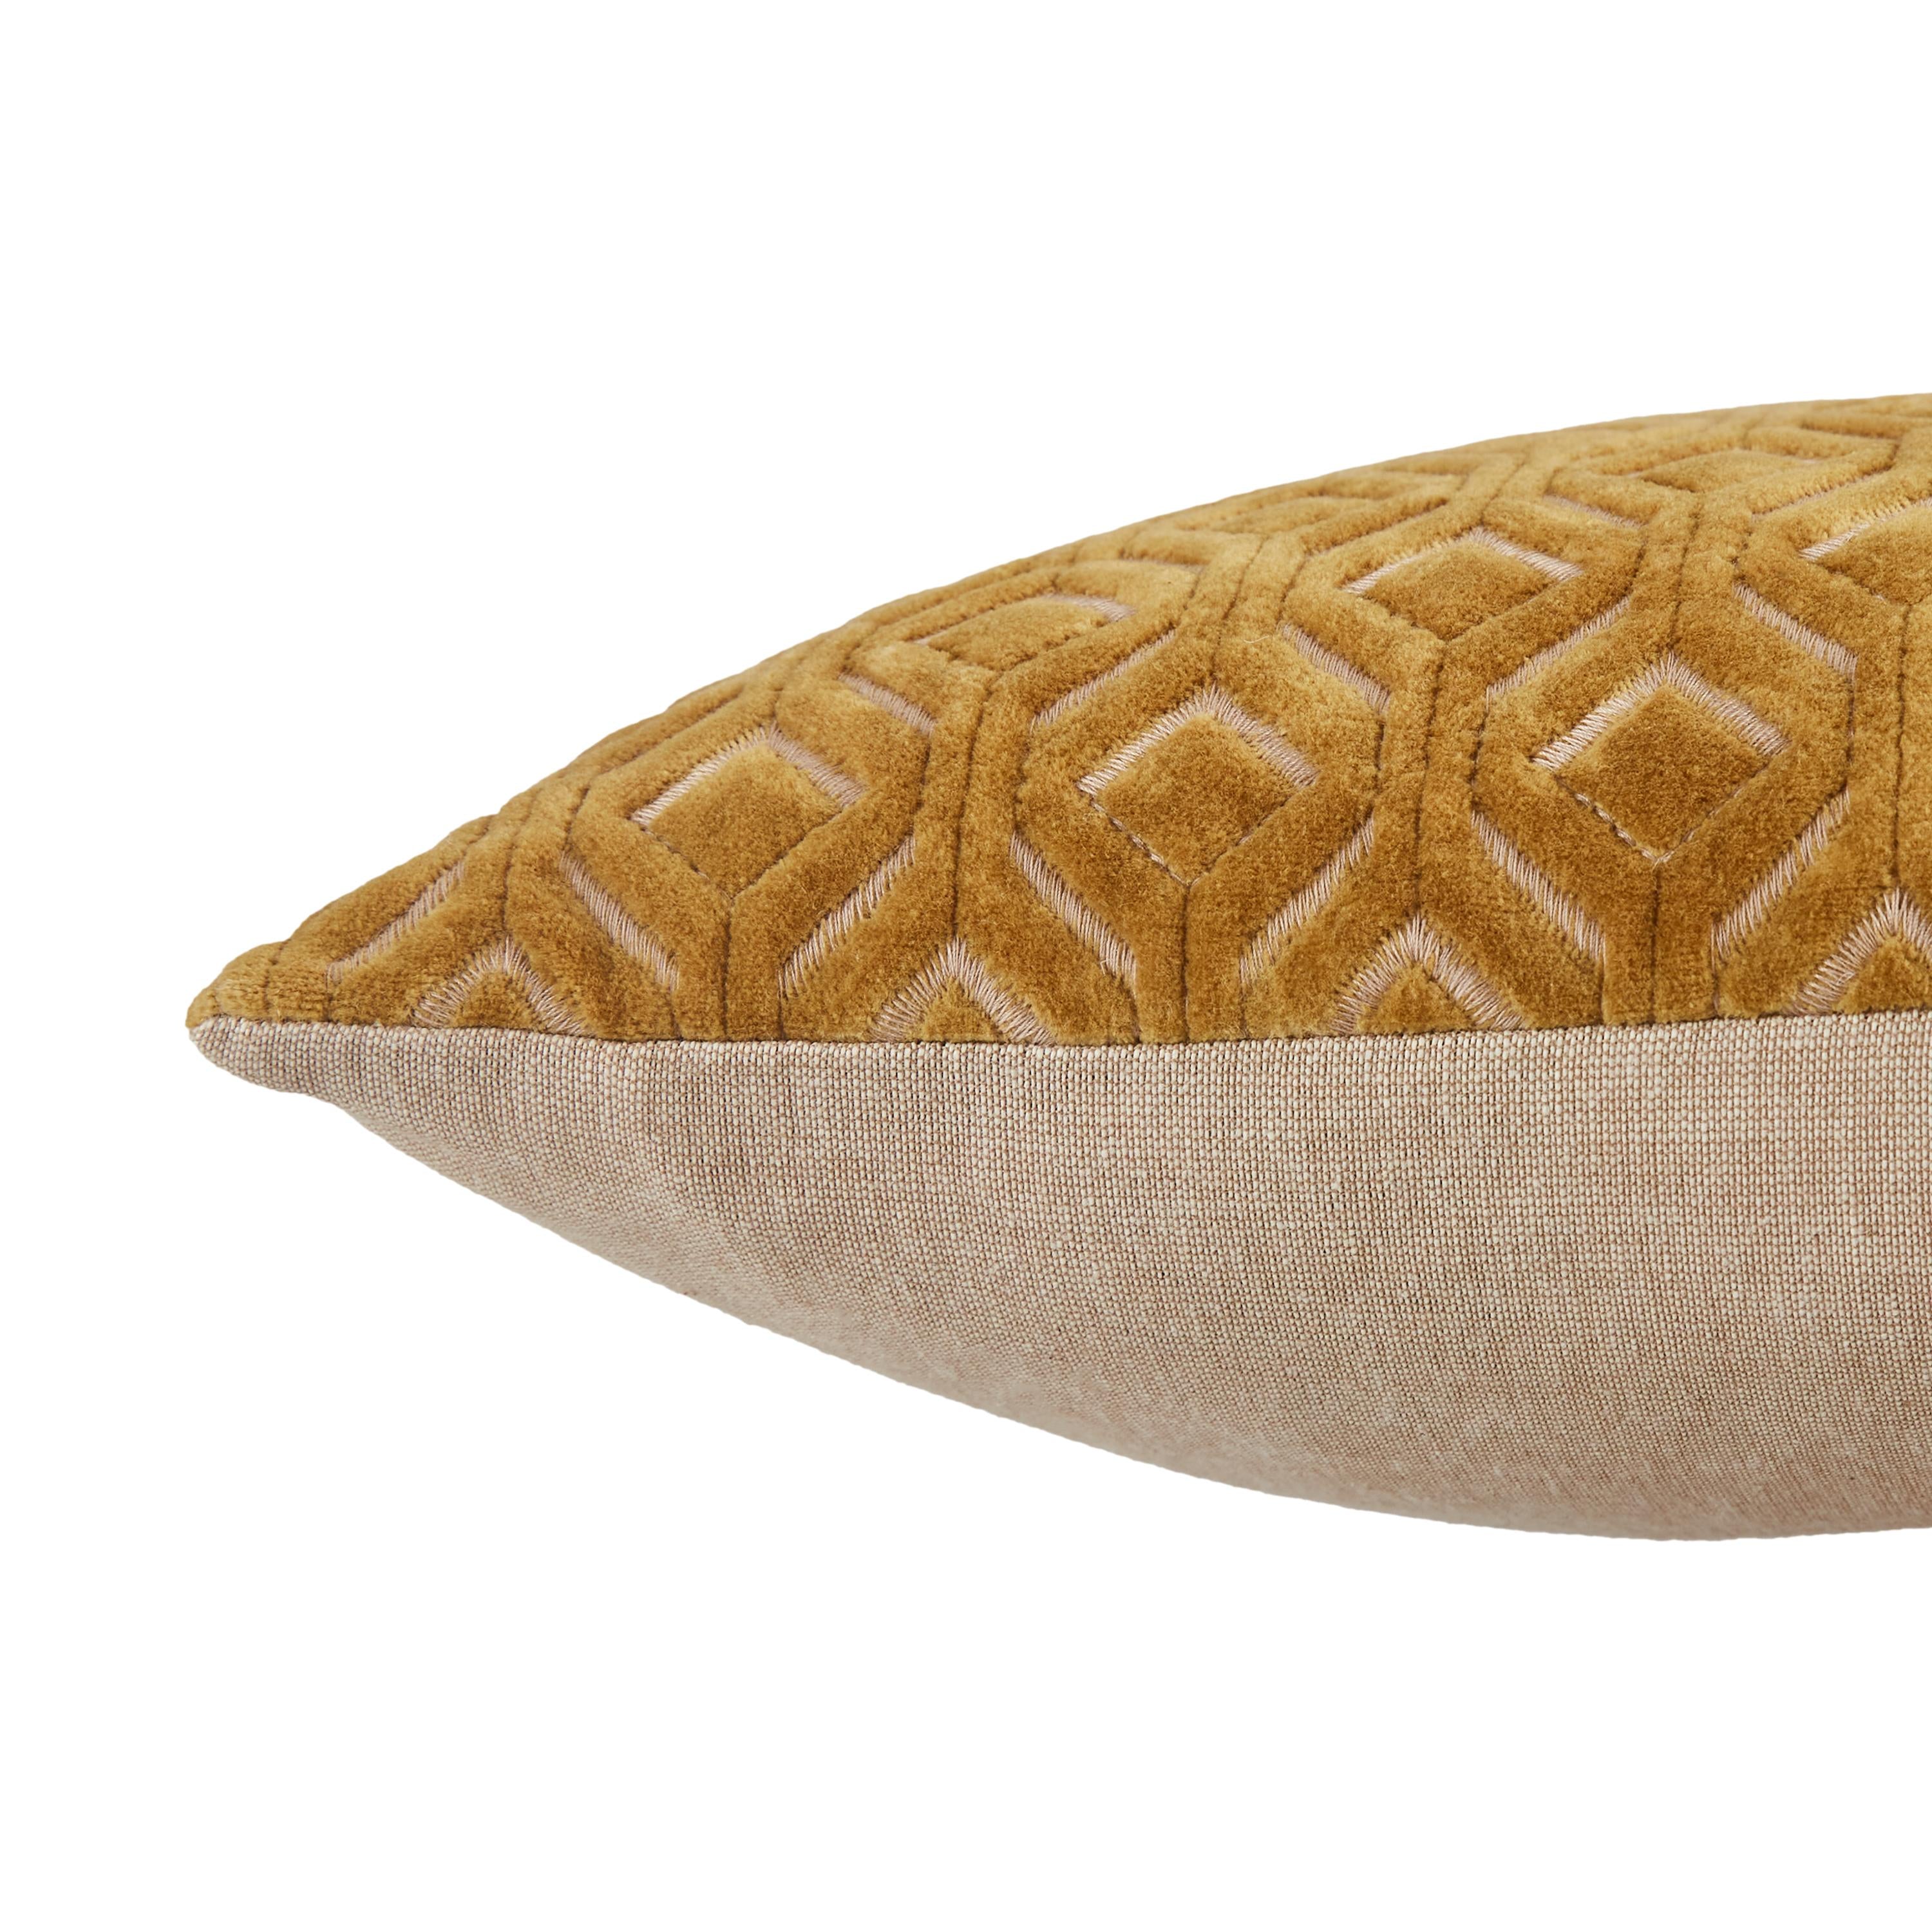 Dove Gray Leopard Pillow Cover Square – Bennett Laine Home Decor